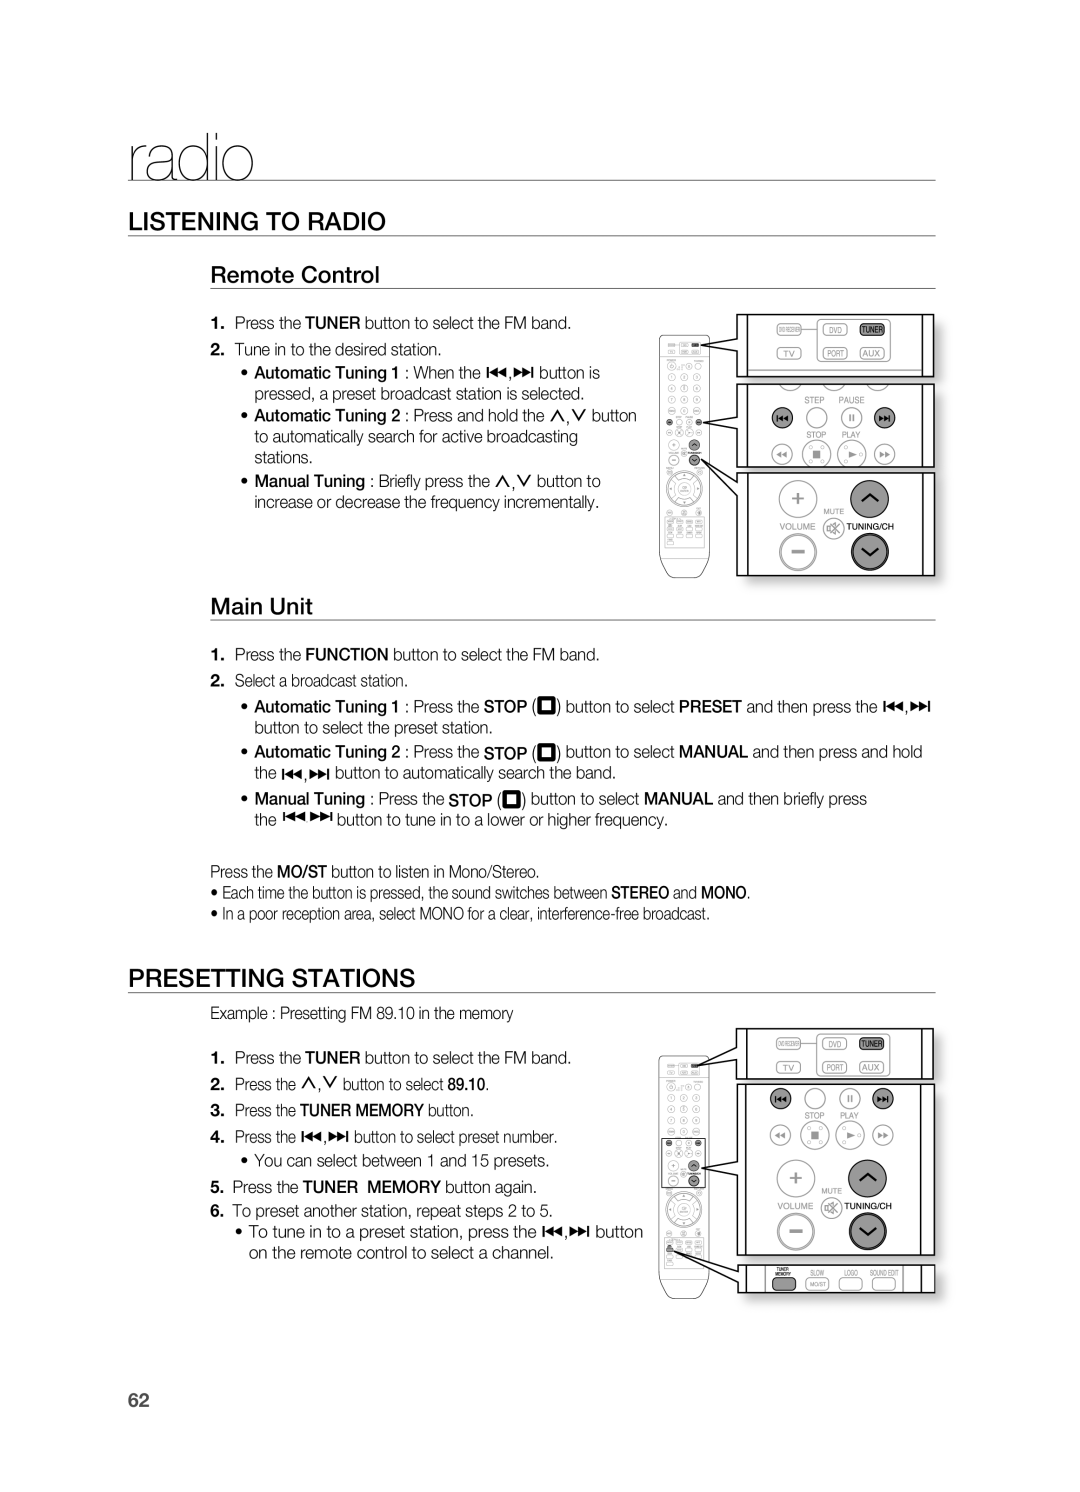 Samsung HT-TWZ315 manual radio, LiStEninG tO rADiO, PrESEttinG StAtiOnS, remote Control, main Unit 